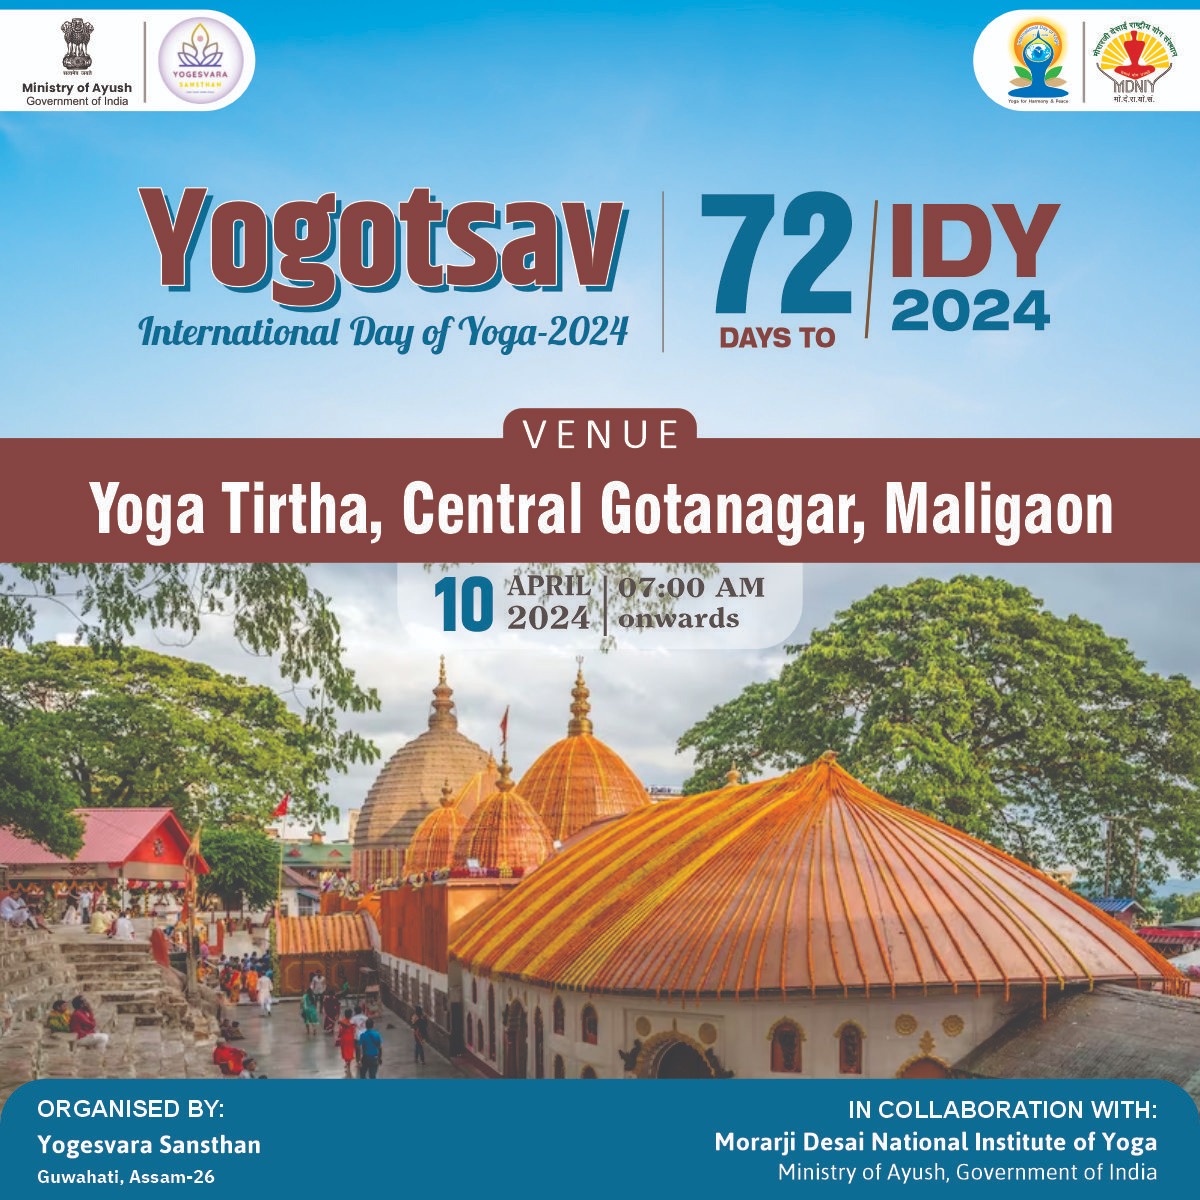 📍 Yoga Tirtha, Central Gotanagar, Maligaon 📆 April 10, 2024 7️⃣2️⃣ Days to International Day of Yoga 2024 Yogesvara Sansthan in collaboration with MDNIY is organizing Yogotsav programme tomorrow. #Yogotsav2024 #IDY2024 #Yoga